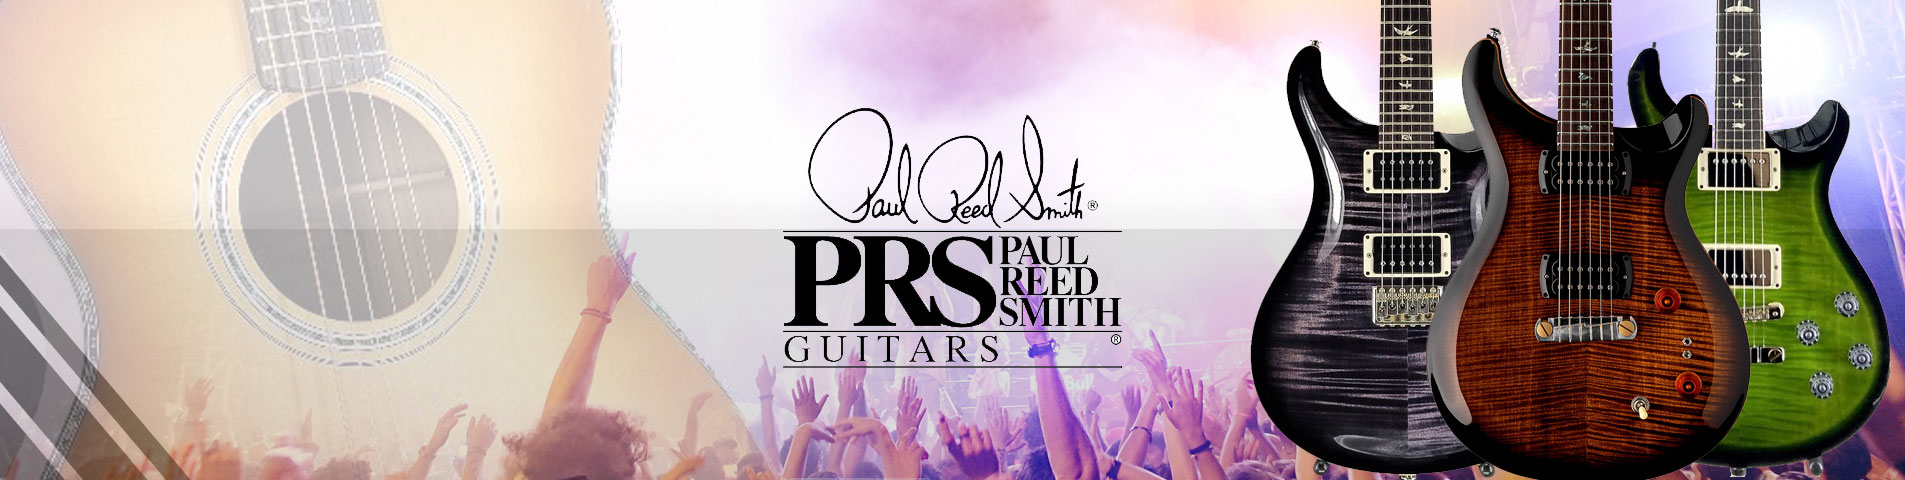 world music supply - Paul Reed Smith